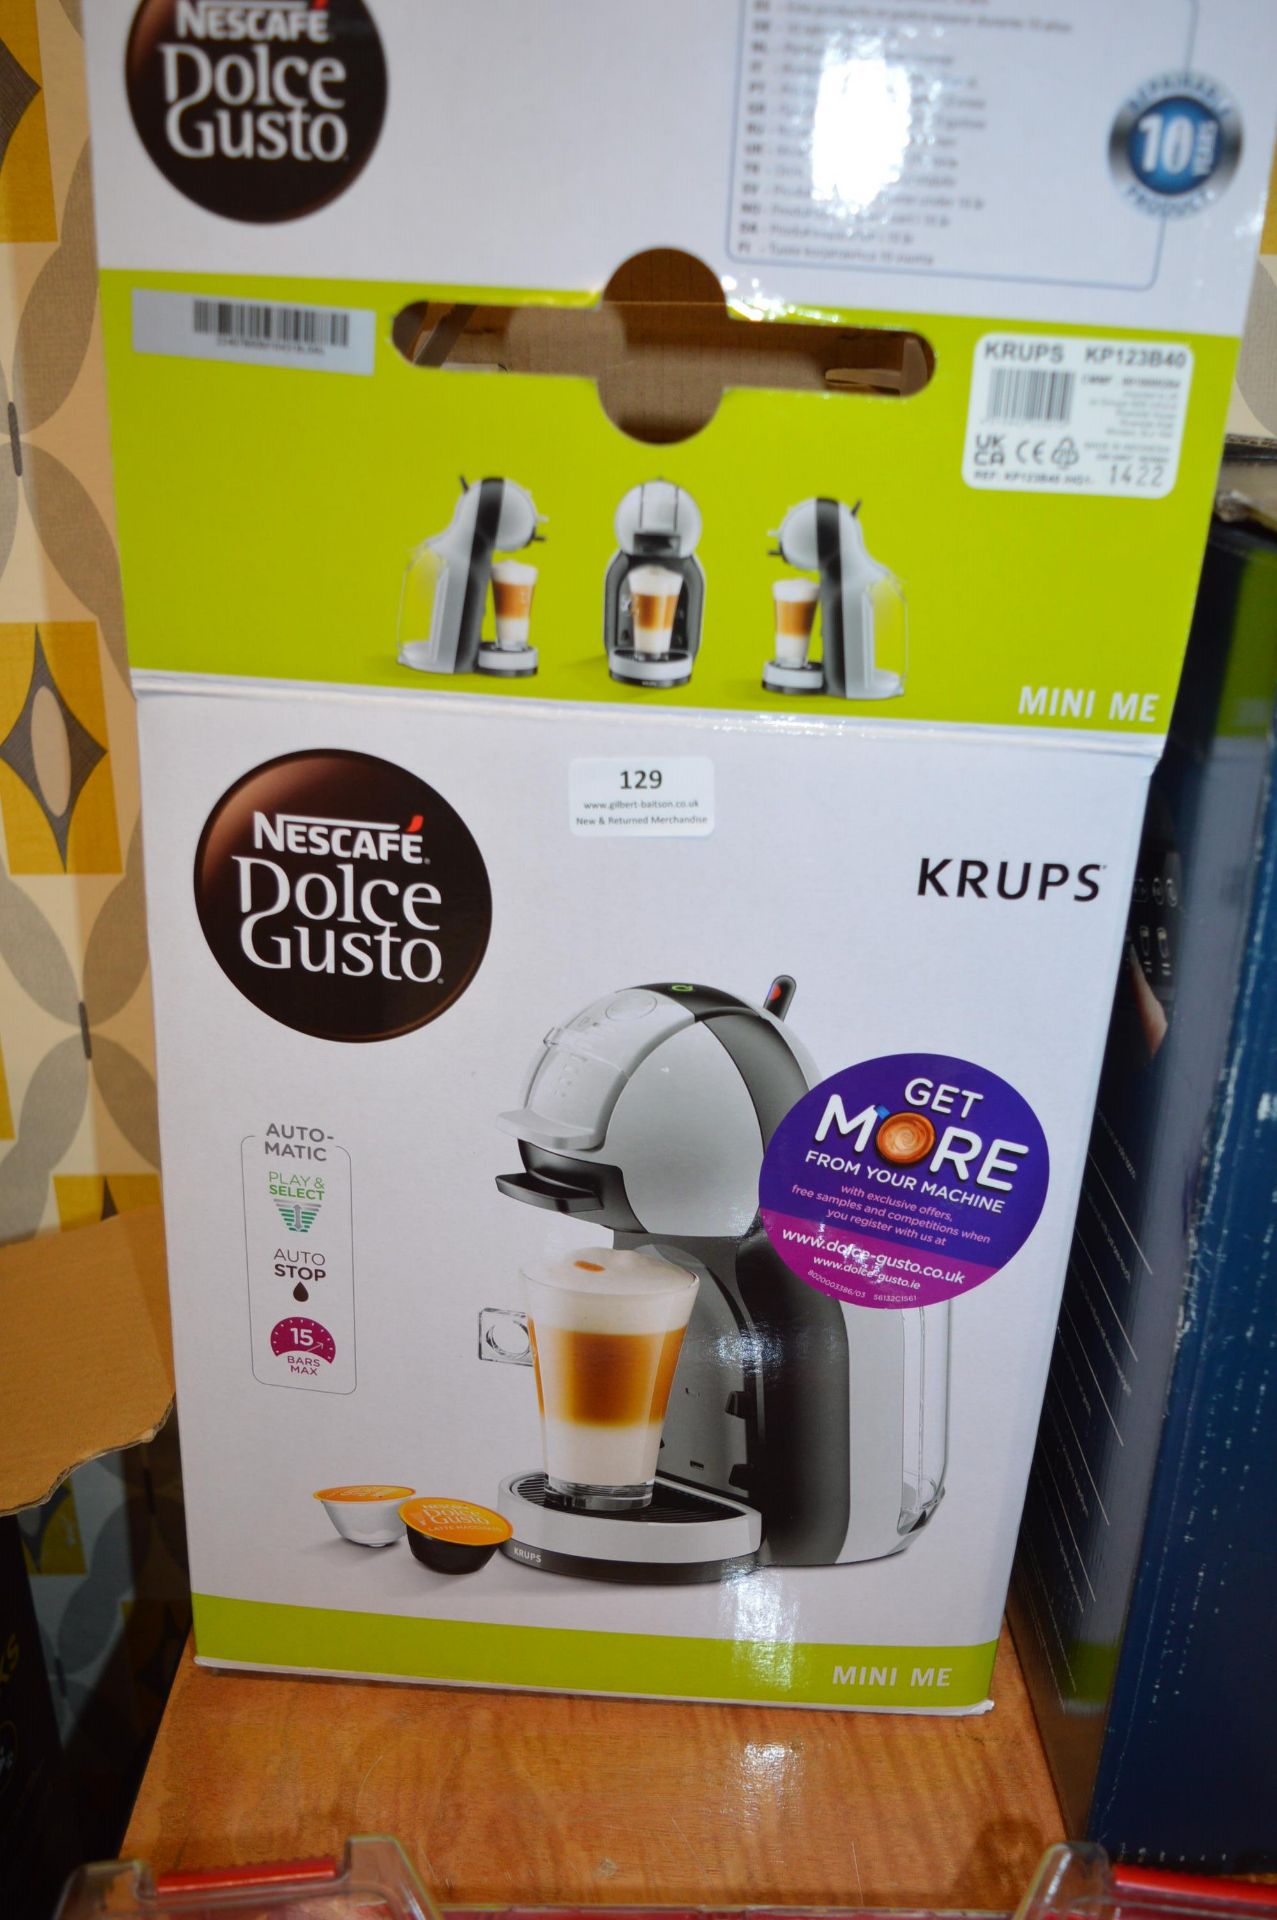 *Krups Mini Me Coffee machine